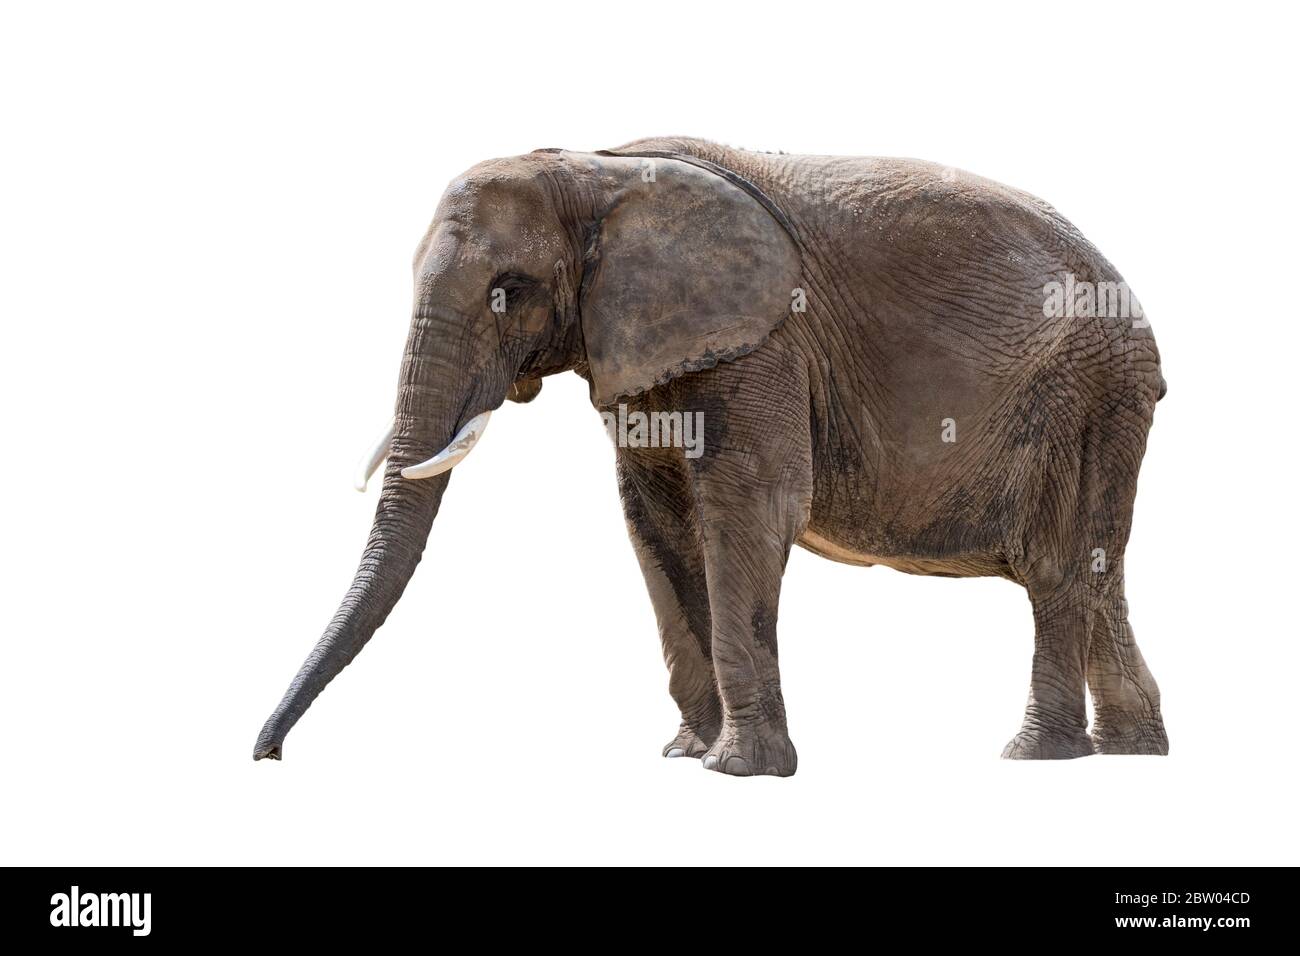 Elefante afoso africano / elefante africano savana (Loxodonta africana) su sfondo bianco Foto Stock